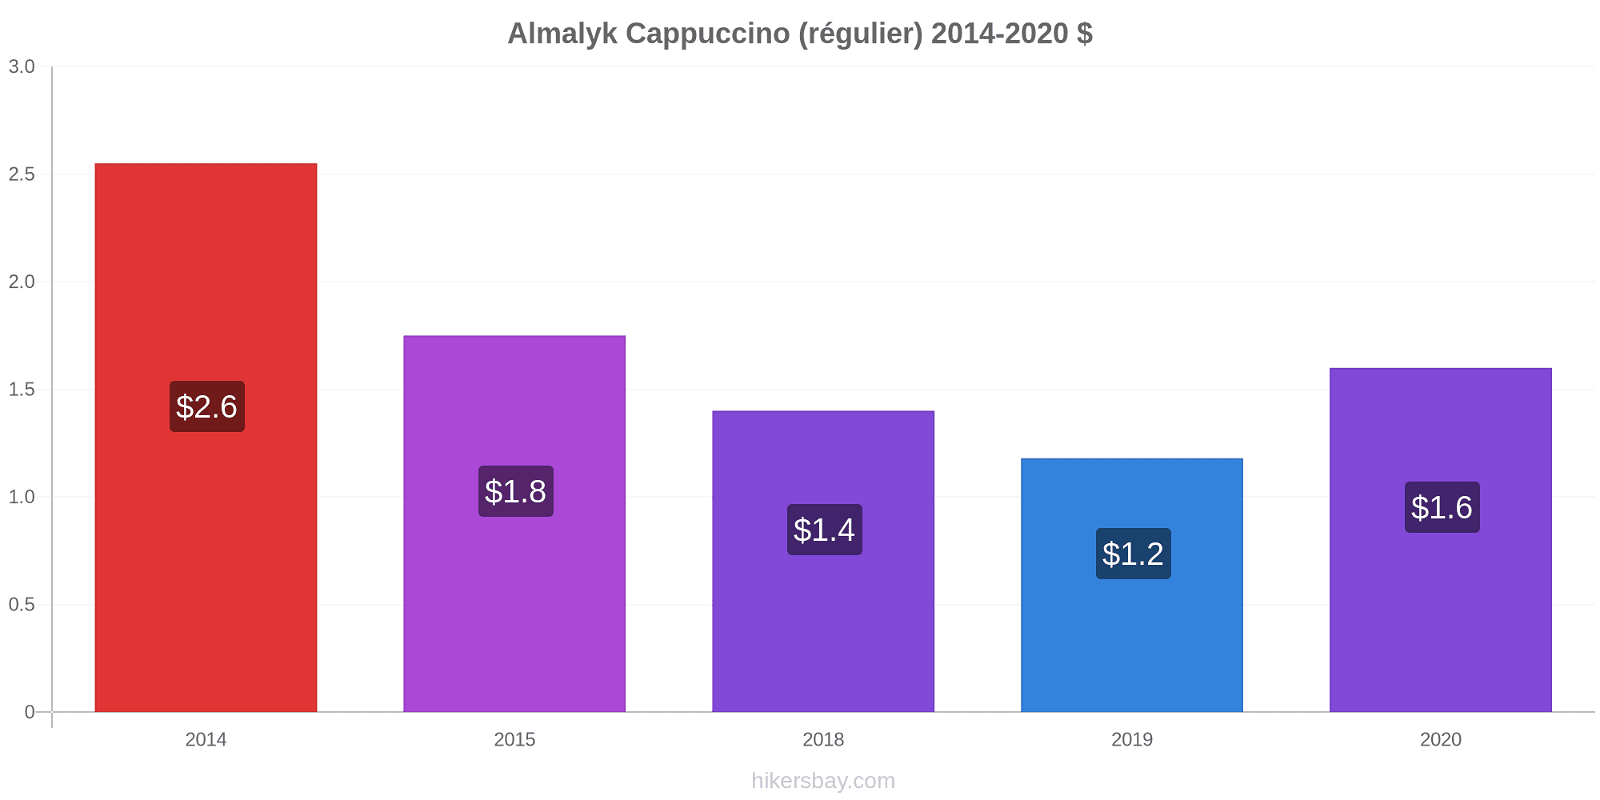 Almalyk changements de prix Cappuccino (régulier) hikersbay.com